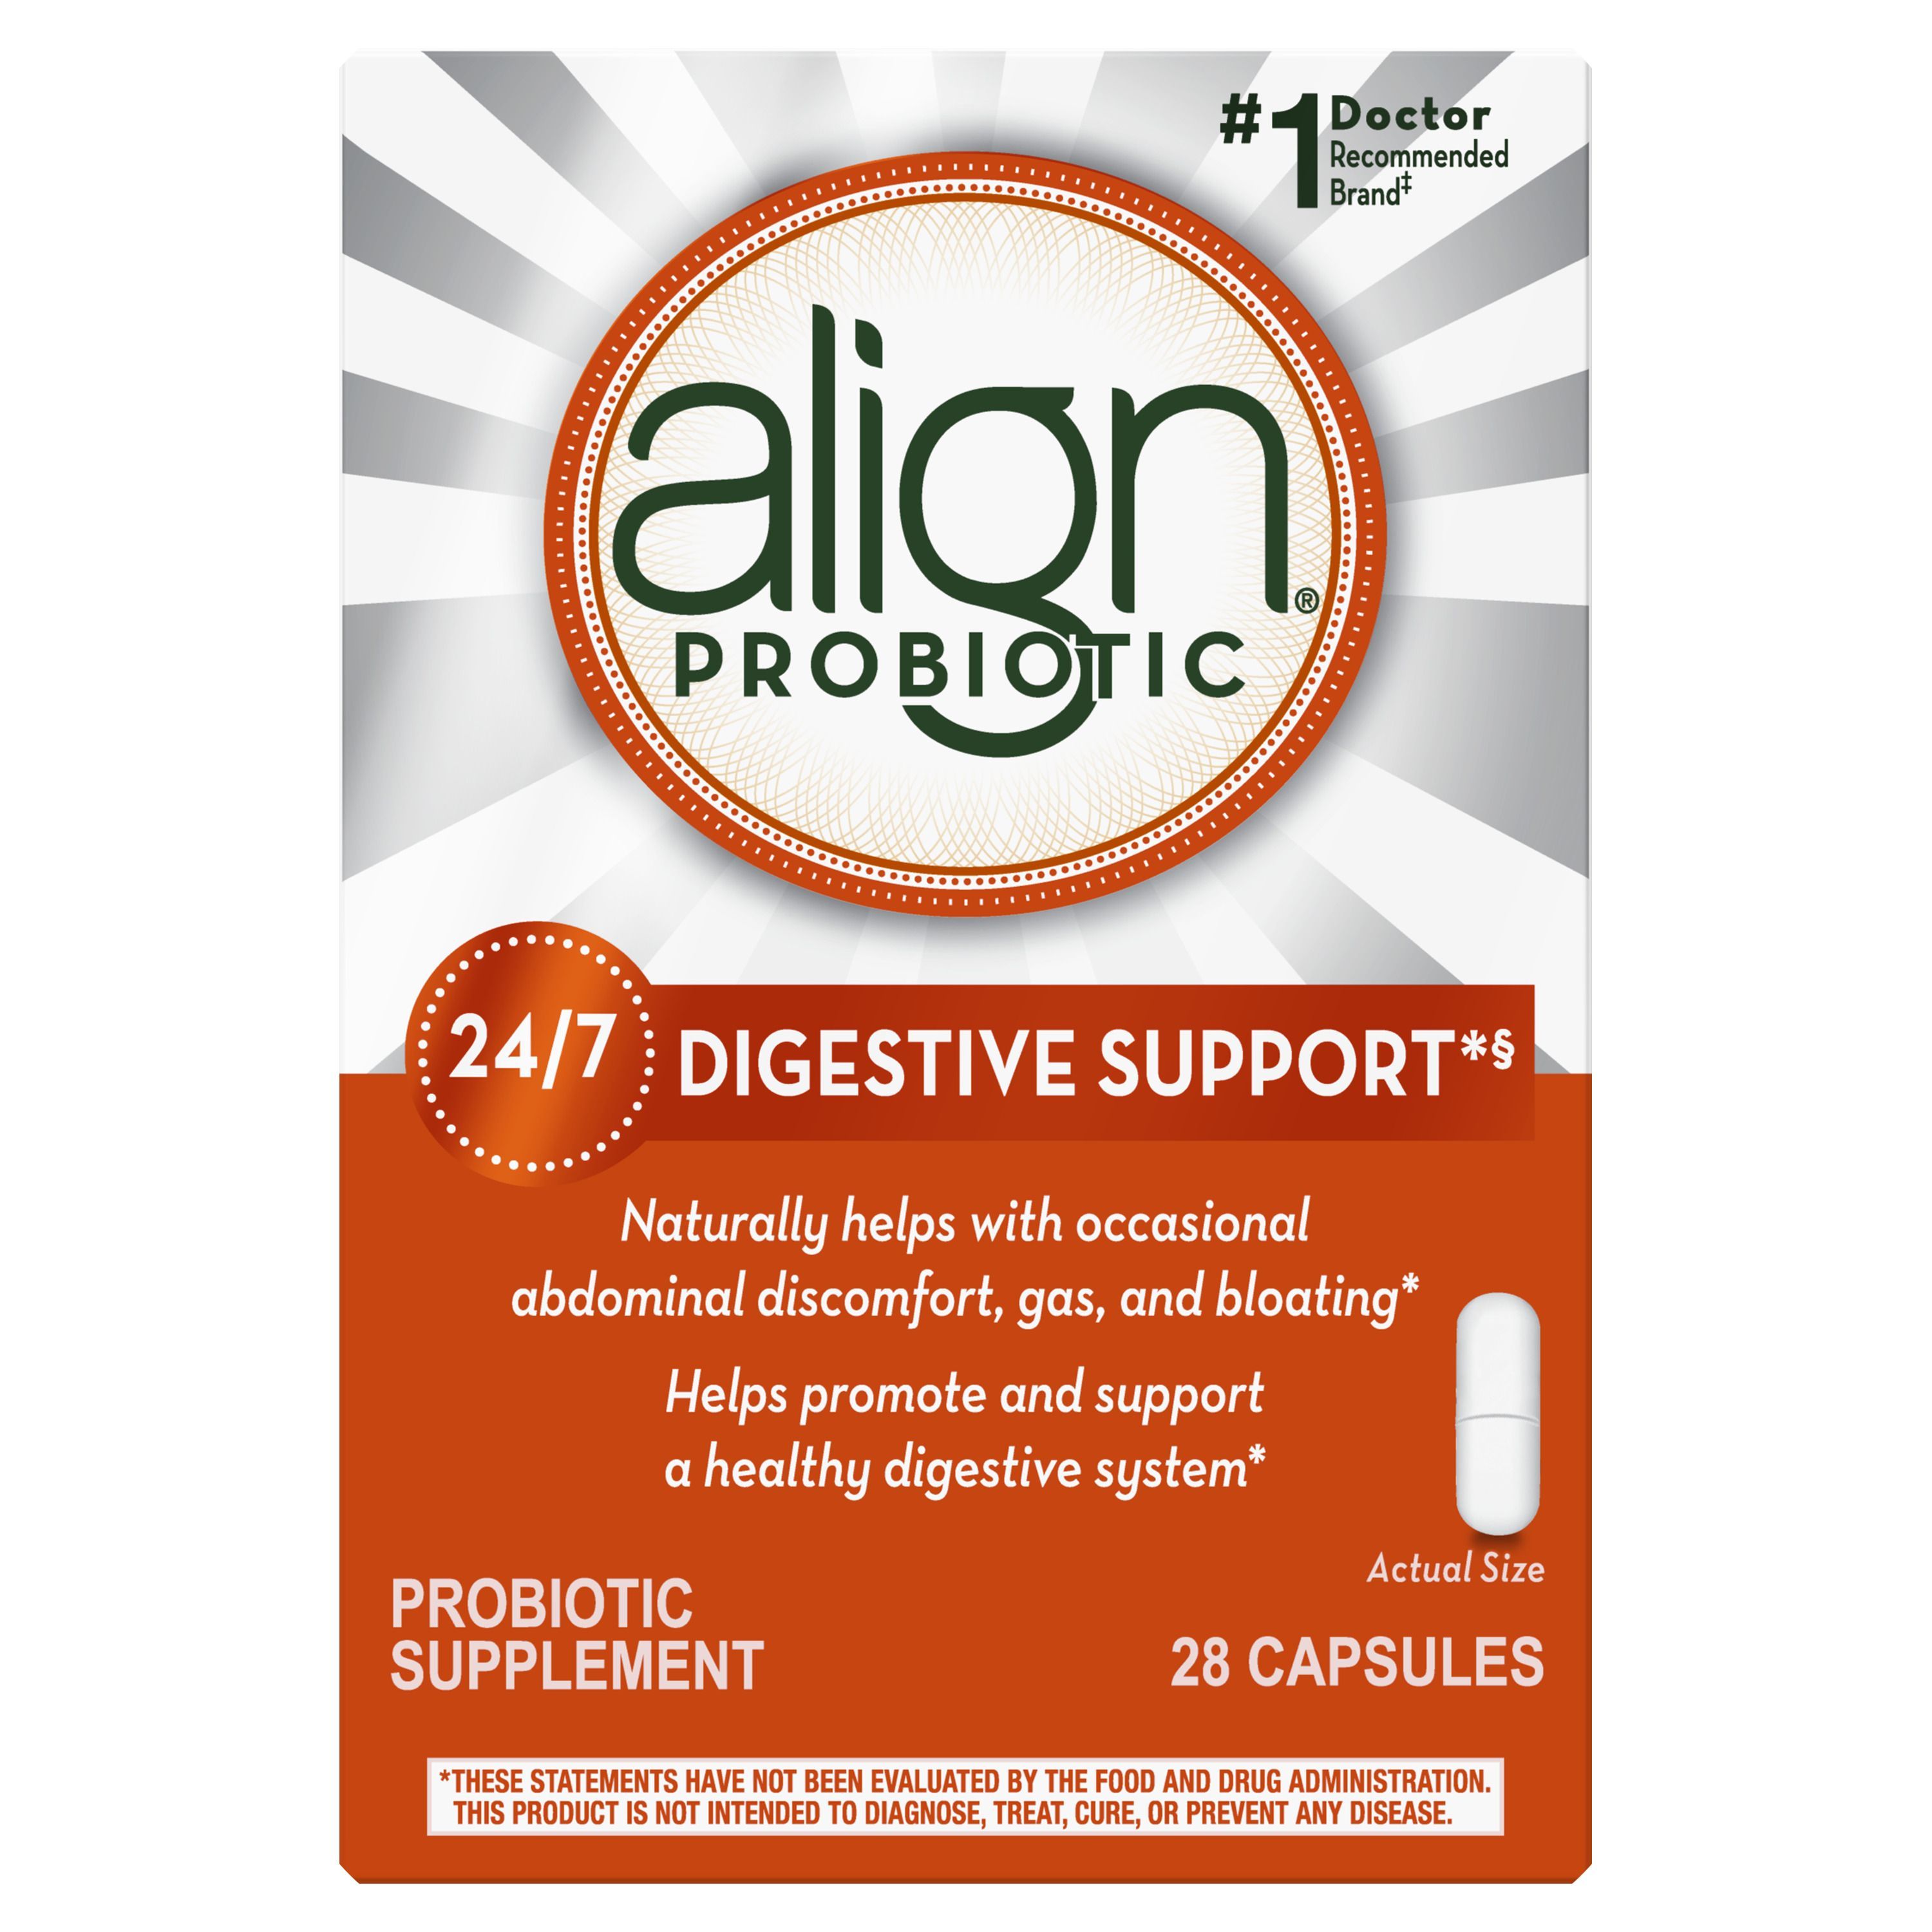 Align Probiotic Supplement 24/7 Digestive Support*§